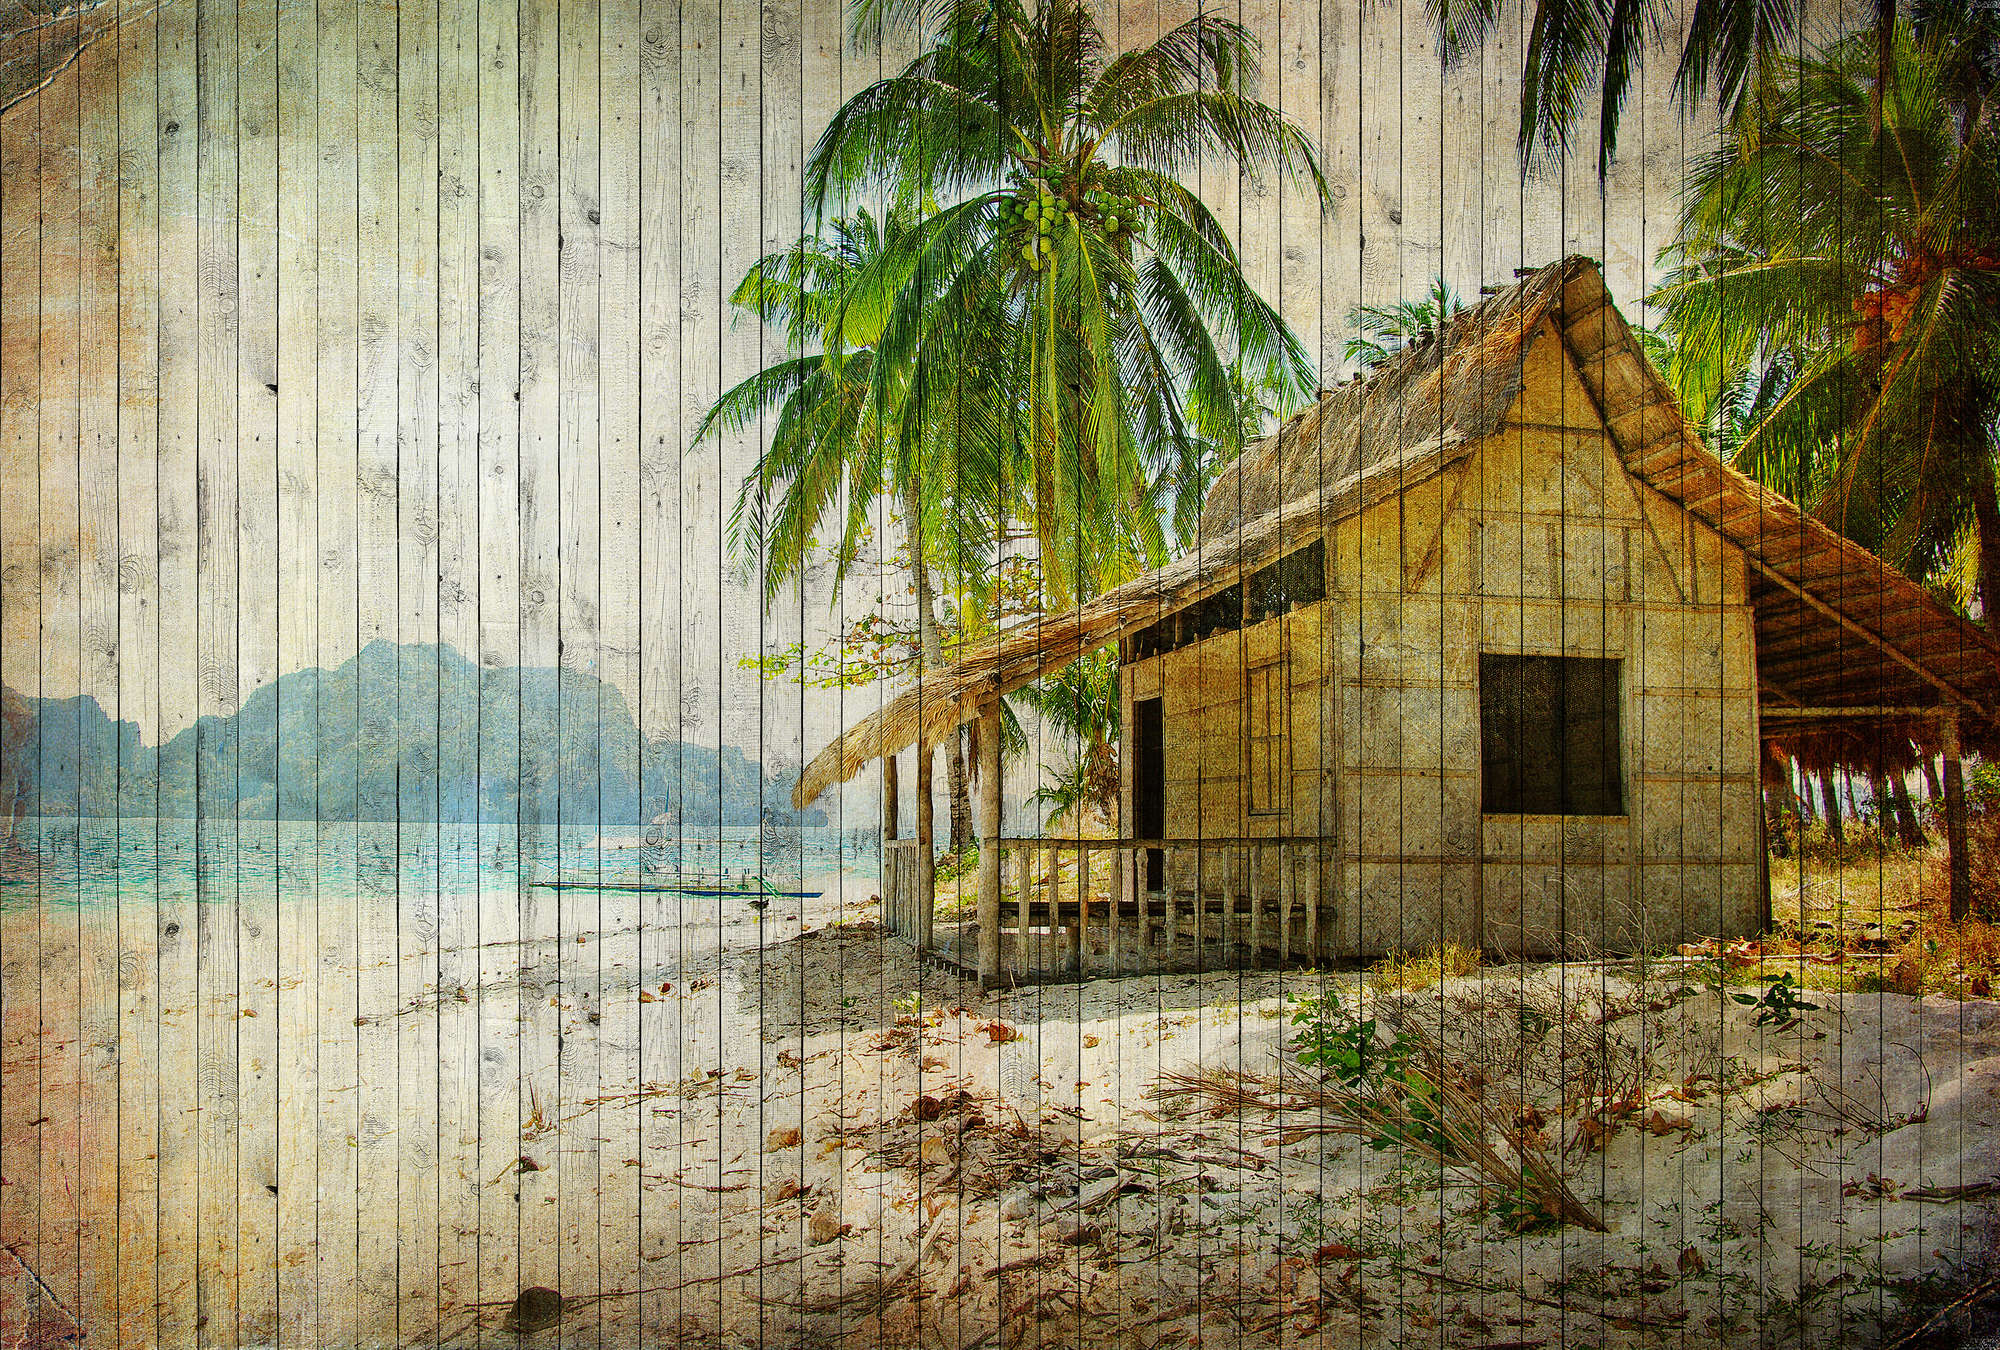             Tahiti 1 - Zuidzee strandbehang met boardoptiek in houten panelen - beige, blauw | parelmoer glad vlies
        